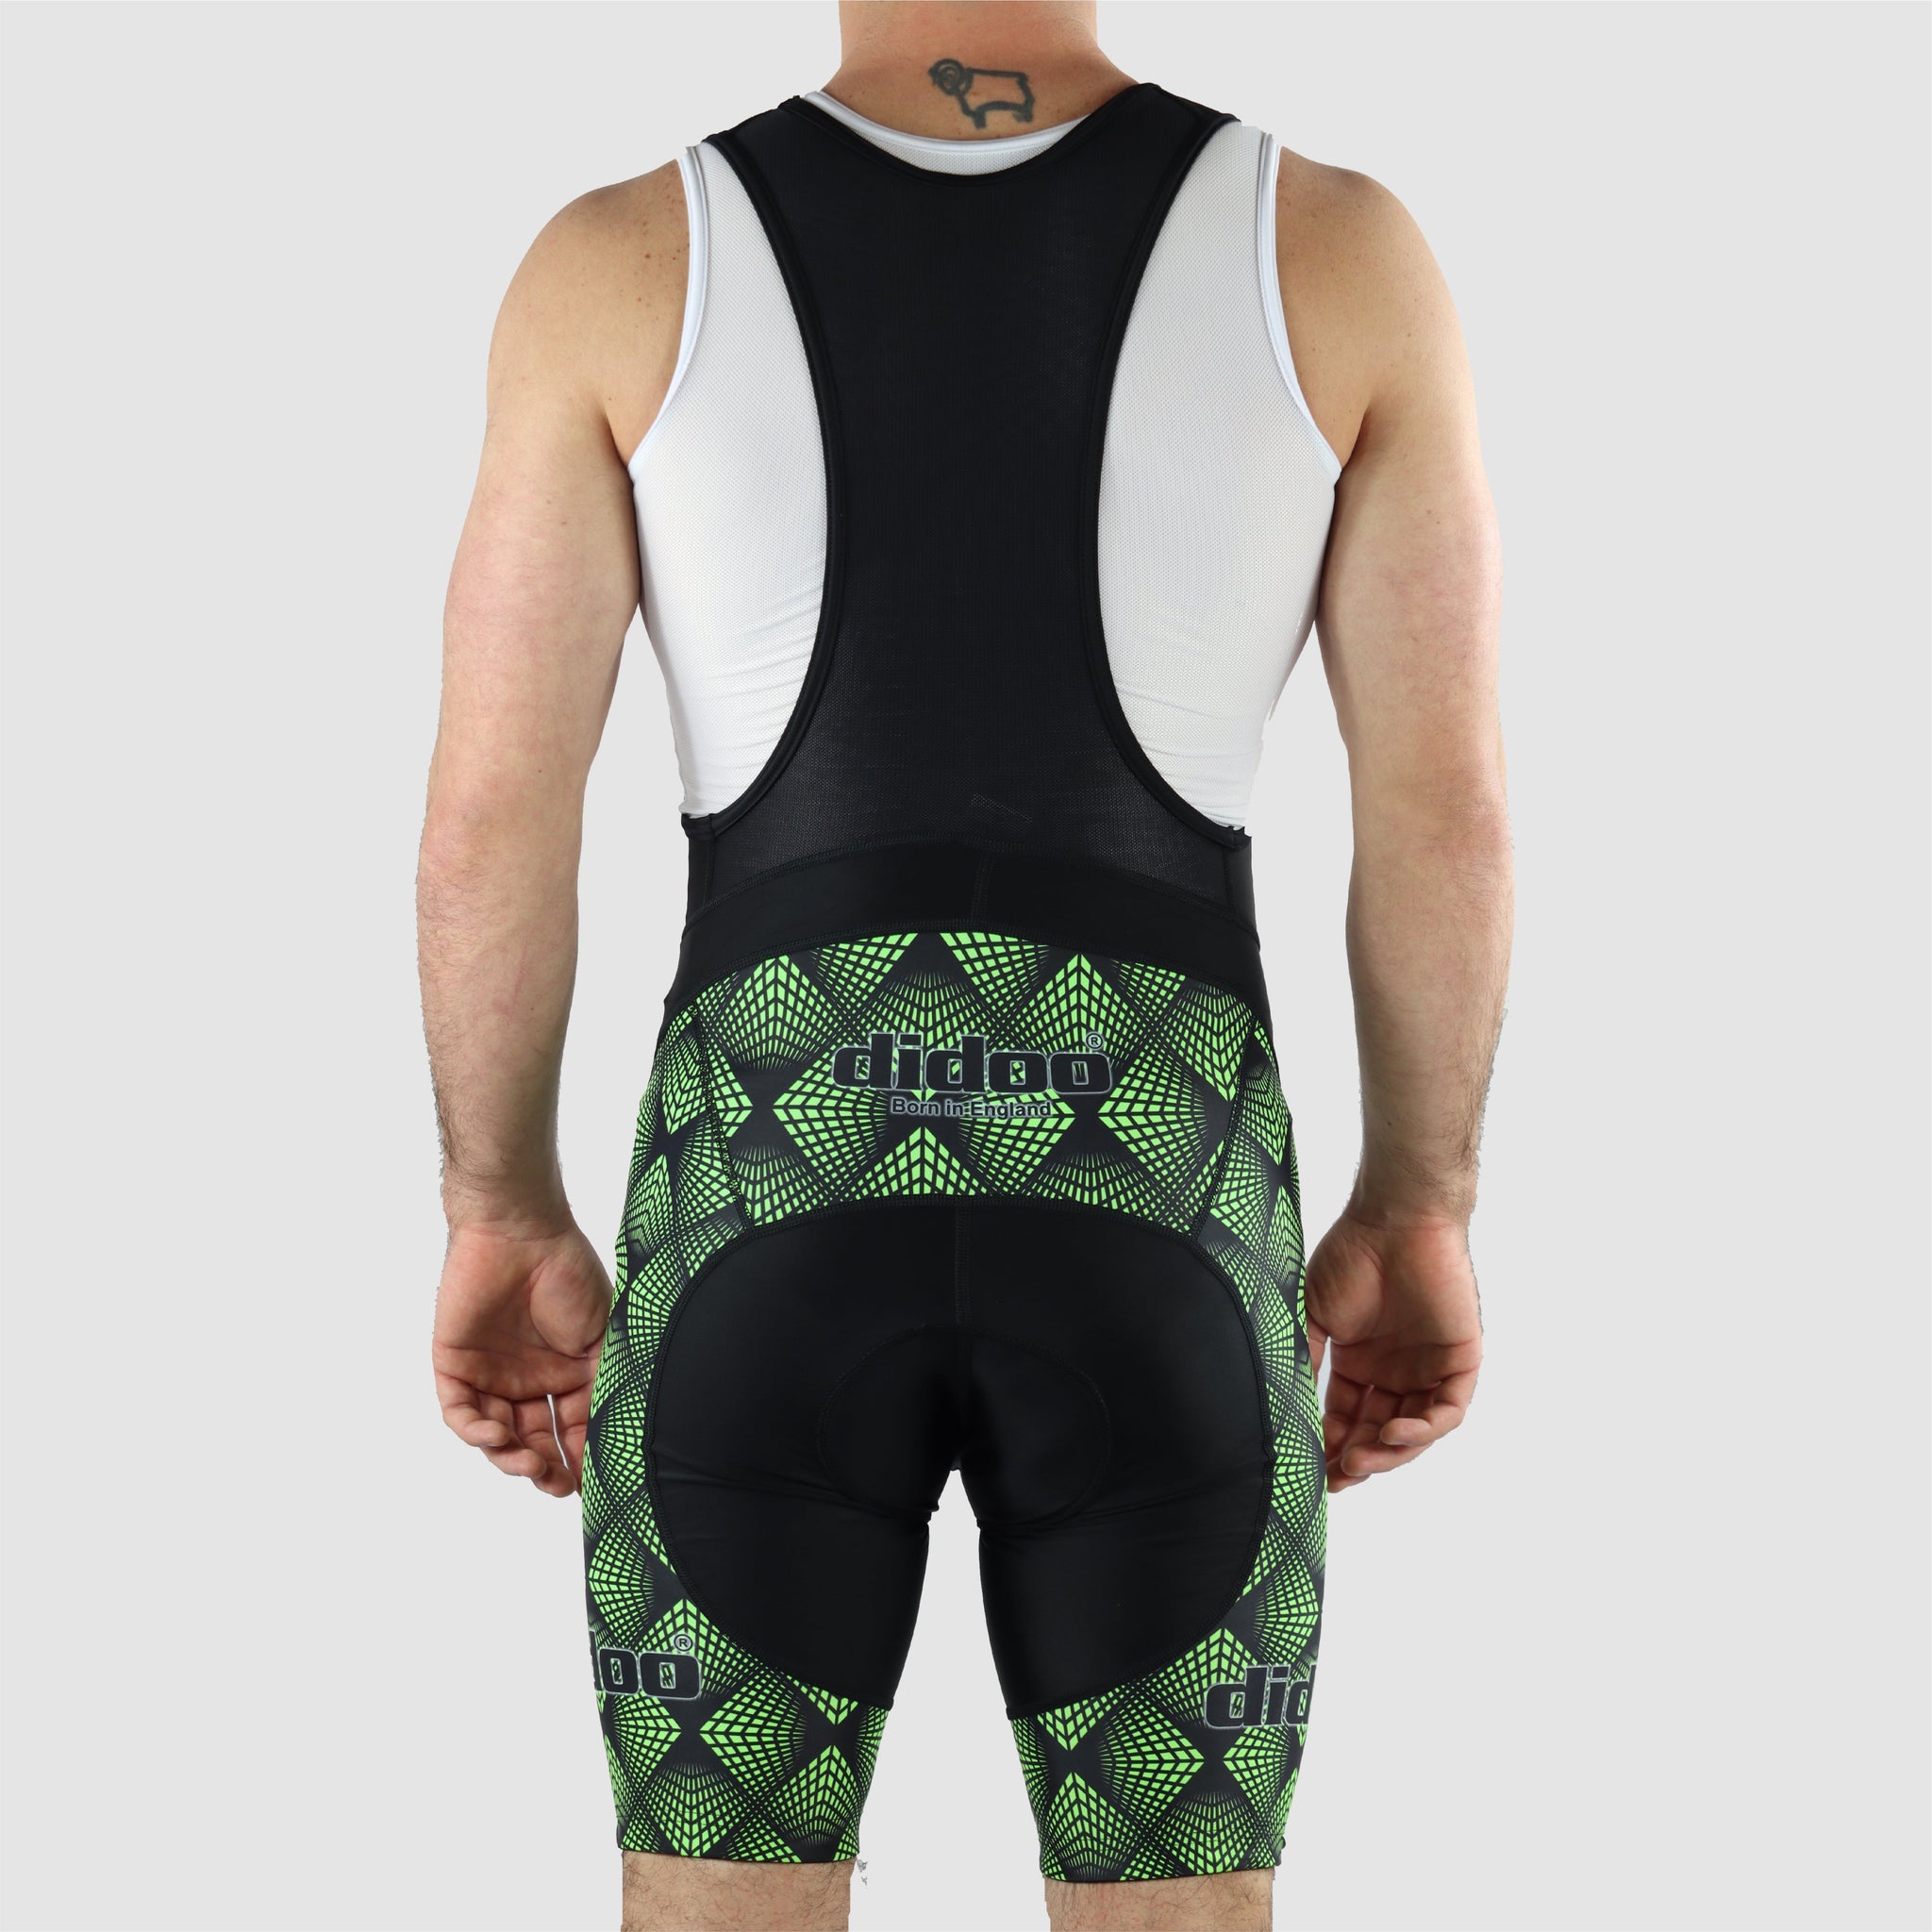 DiDOO Men's Classic Quick Dry Padded Cycling Bib Shorts Black and Green